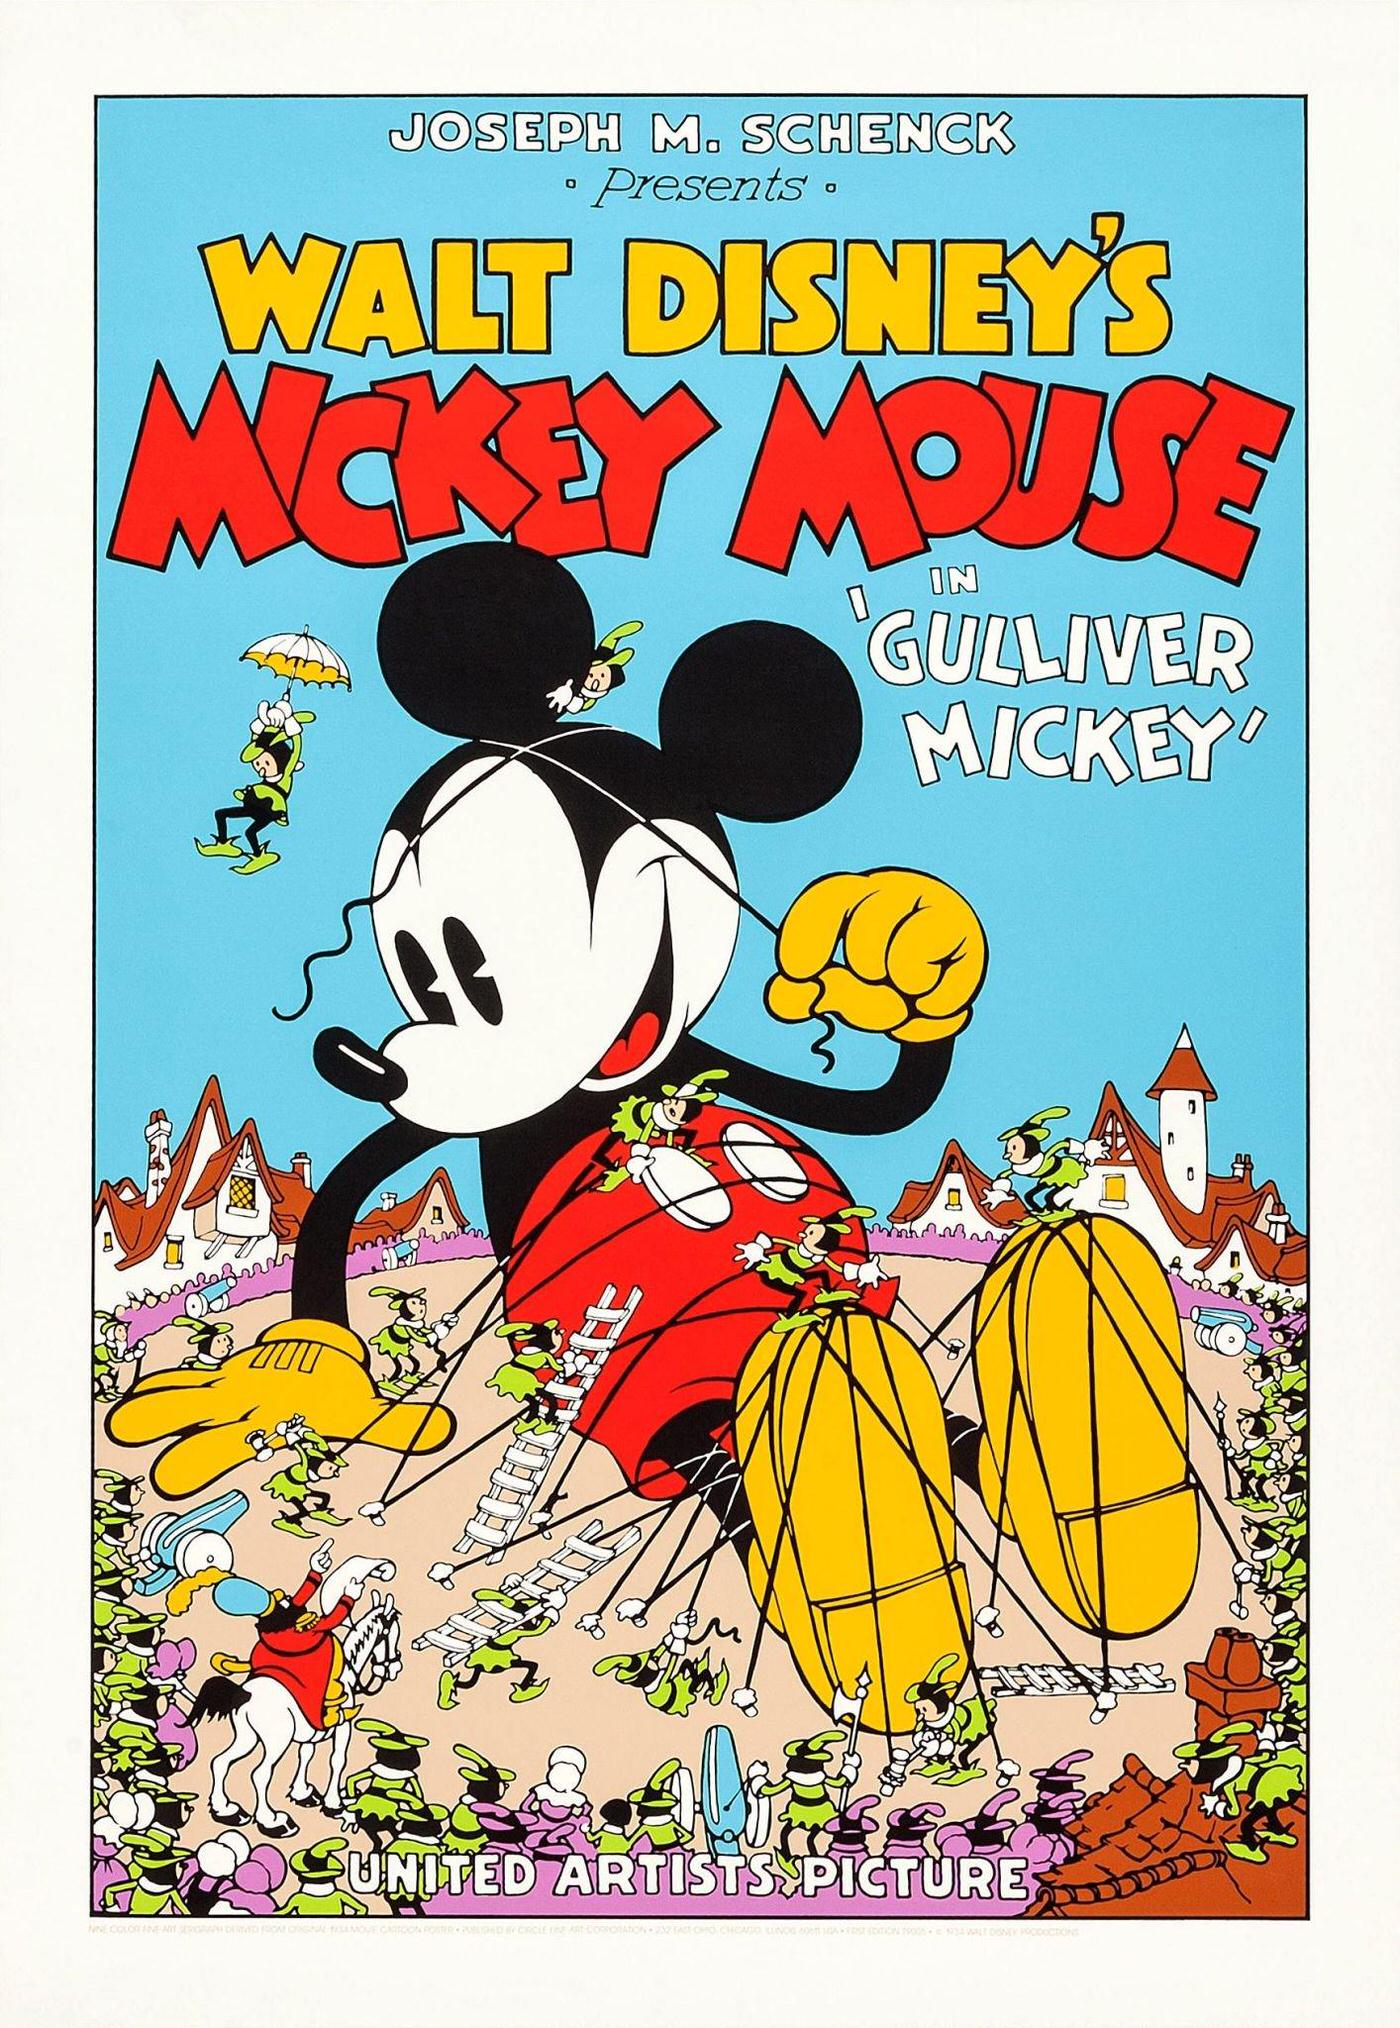 Gulliver Mickey, 1934.